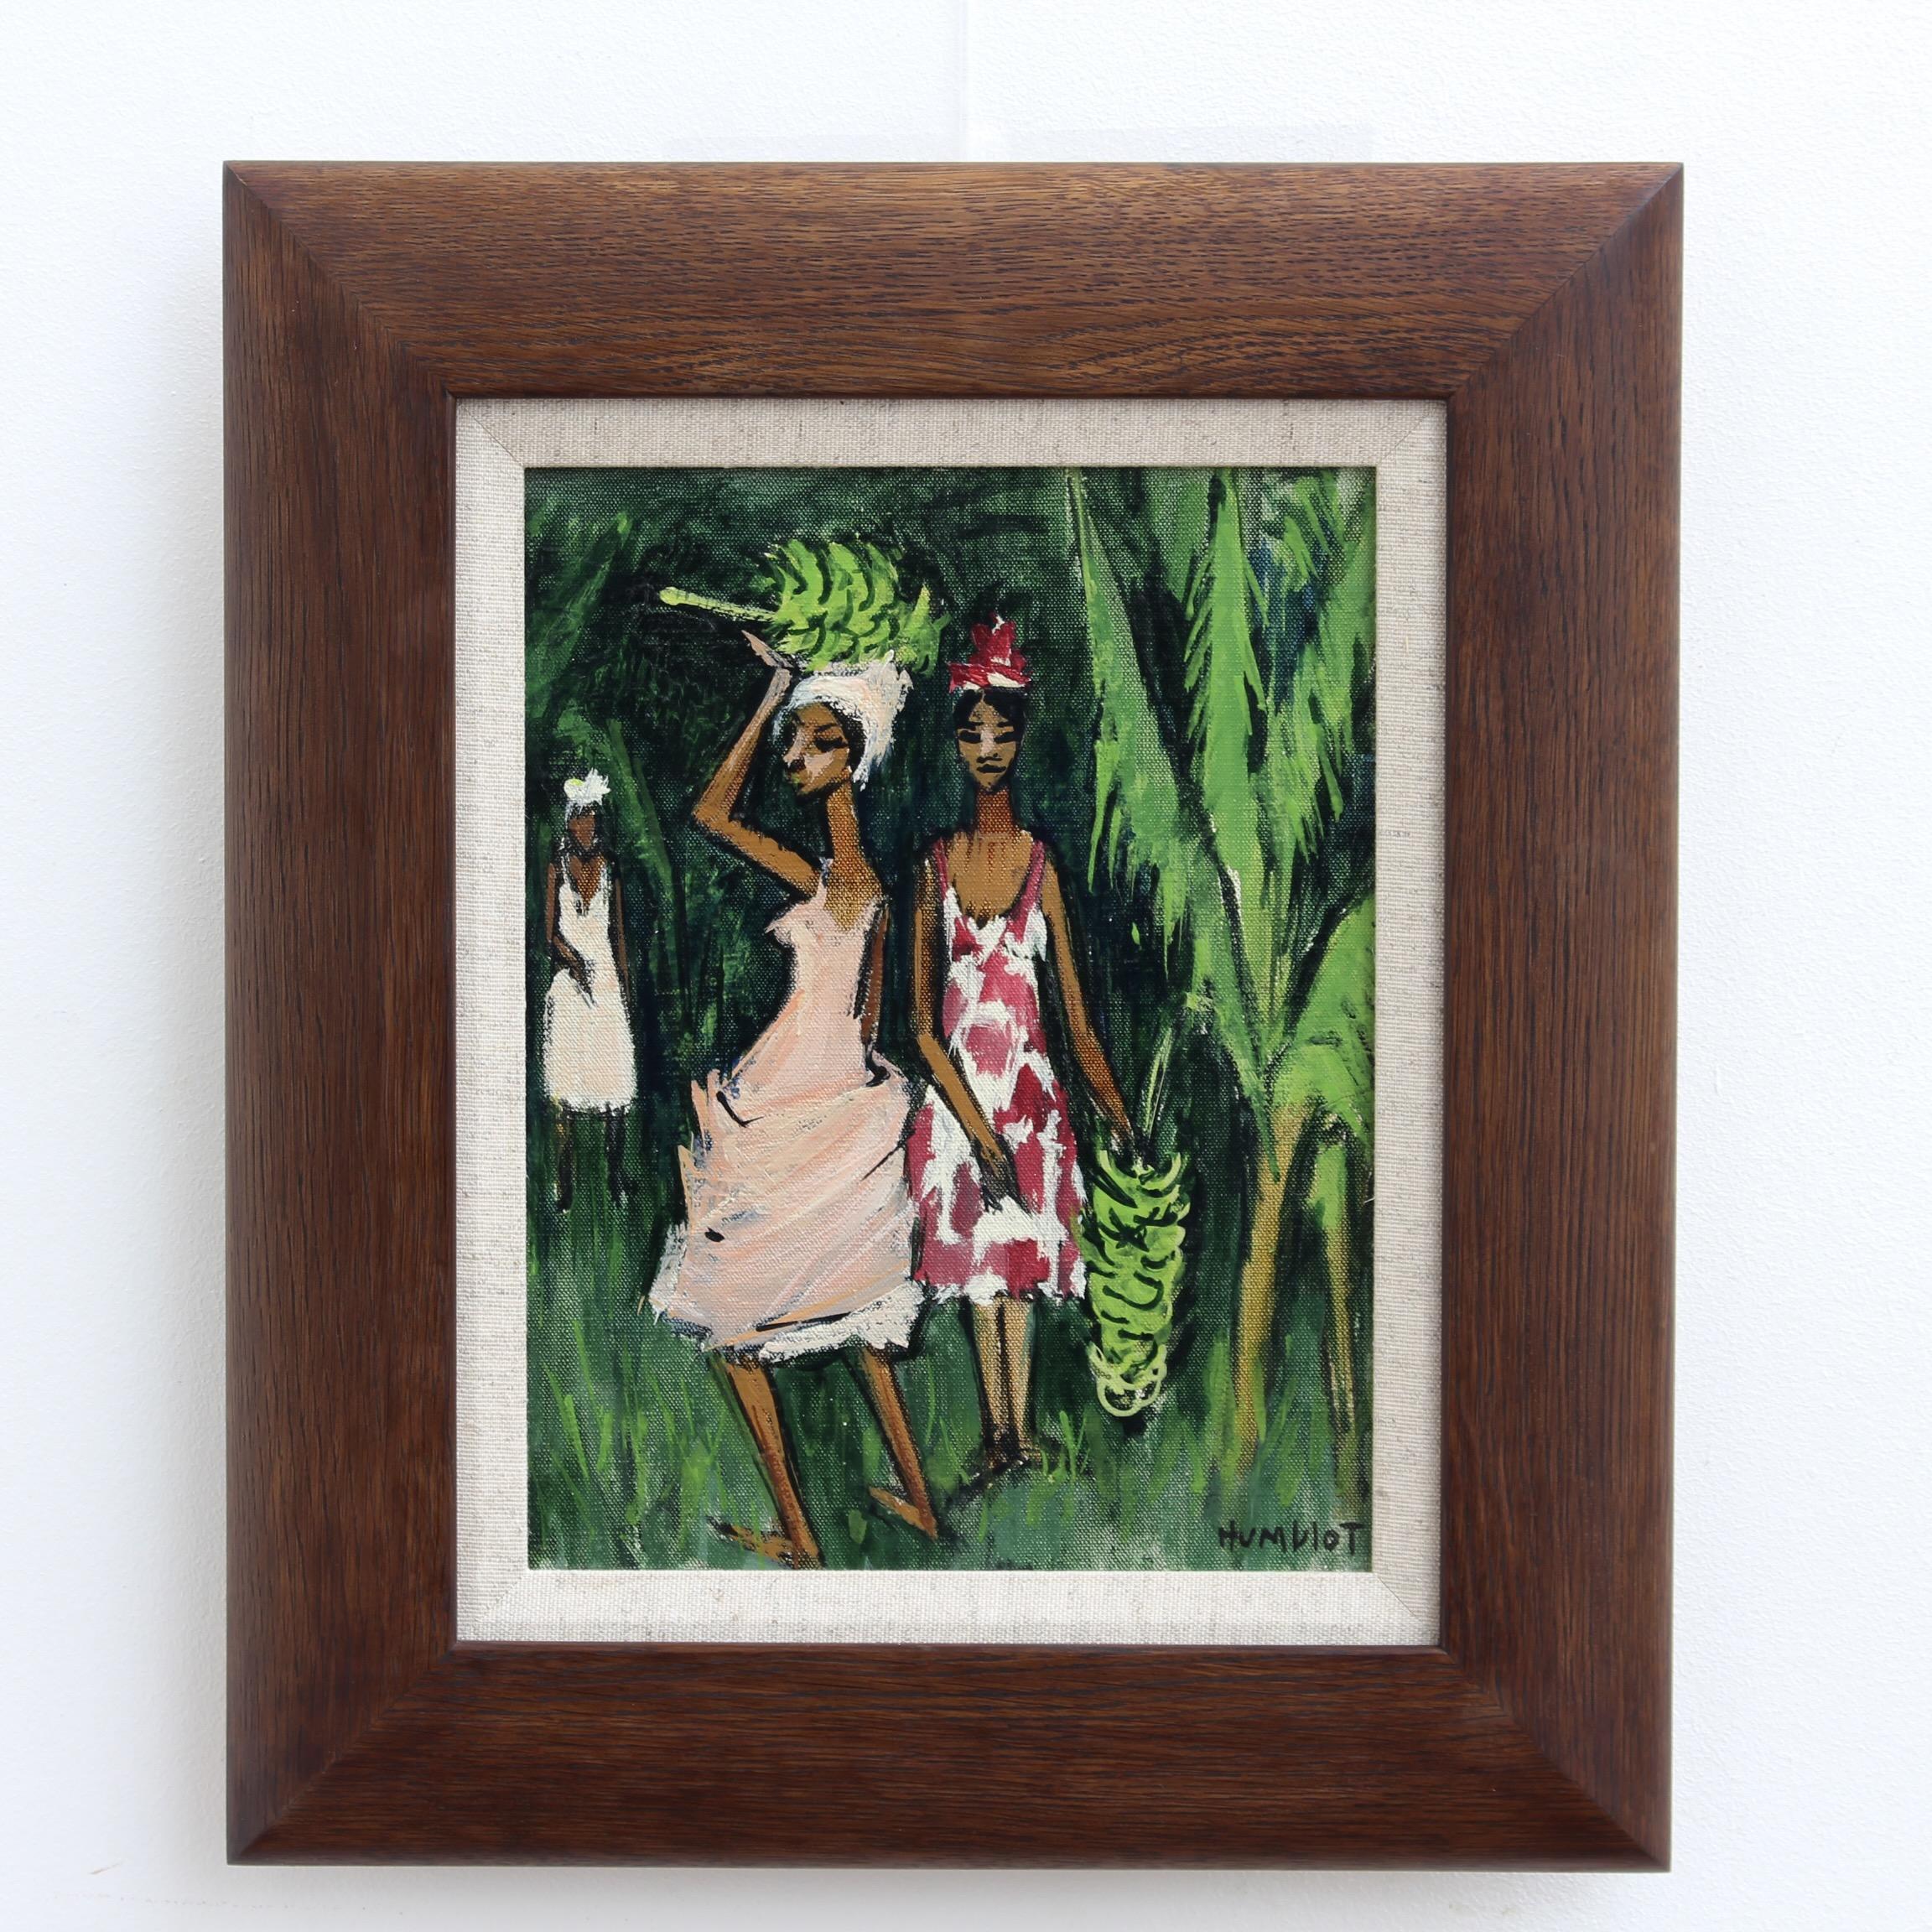 The Banana Plantation Guadeloupe II - Painting by Robert Humblot